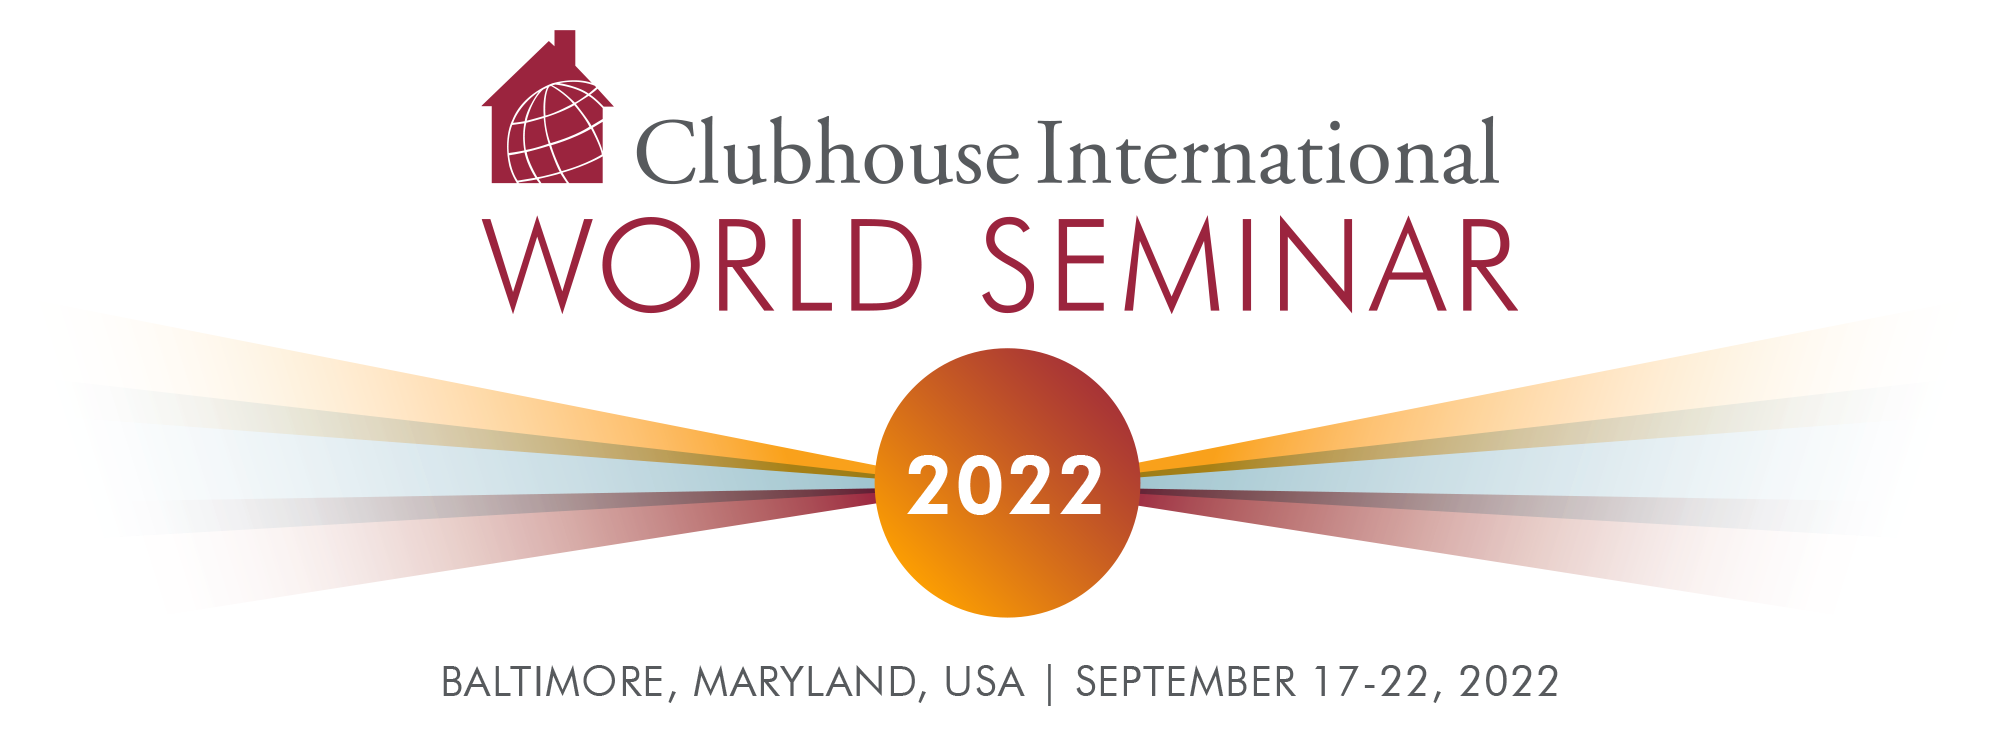 Clubhouse International World Seminar Convenes Keynote Speaker